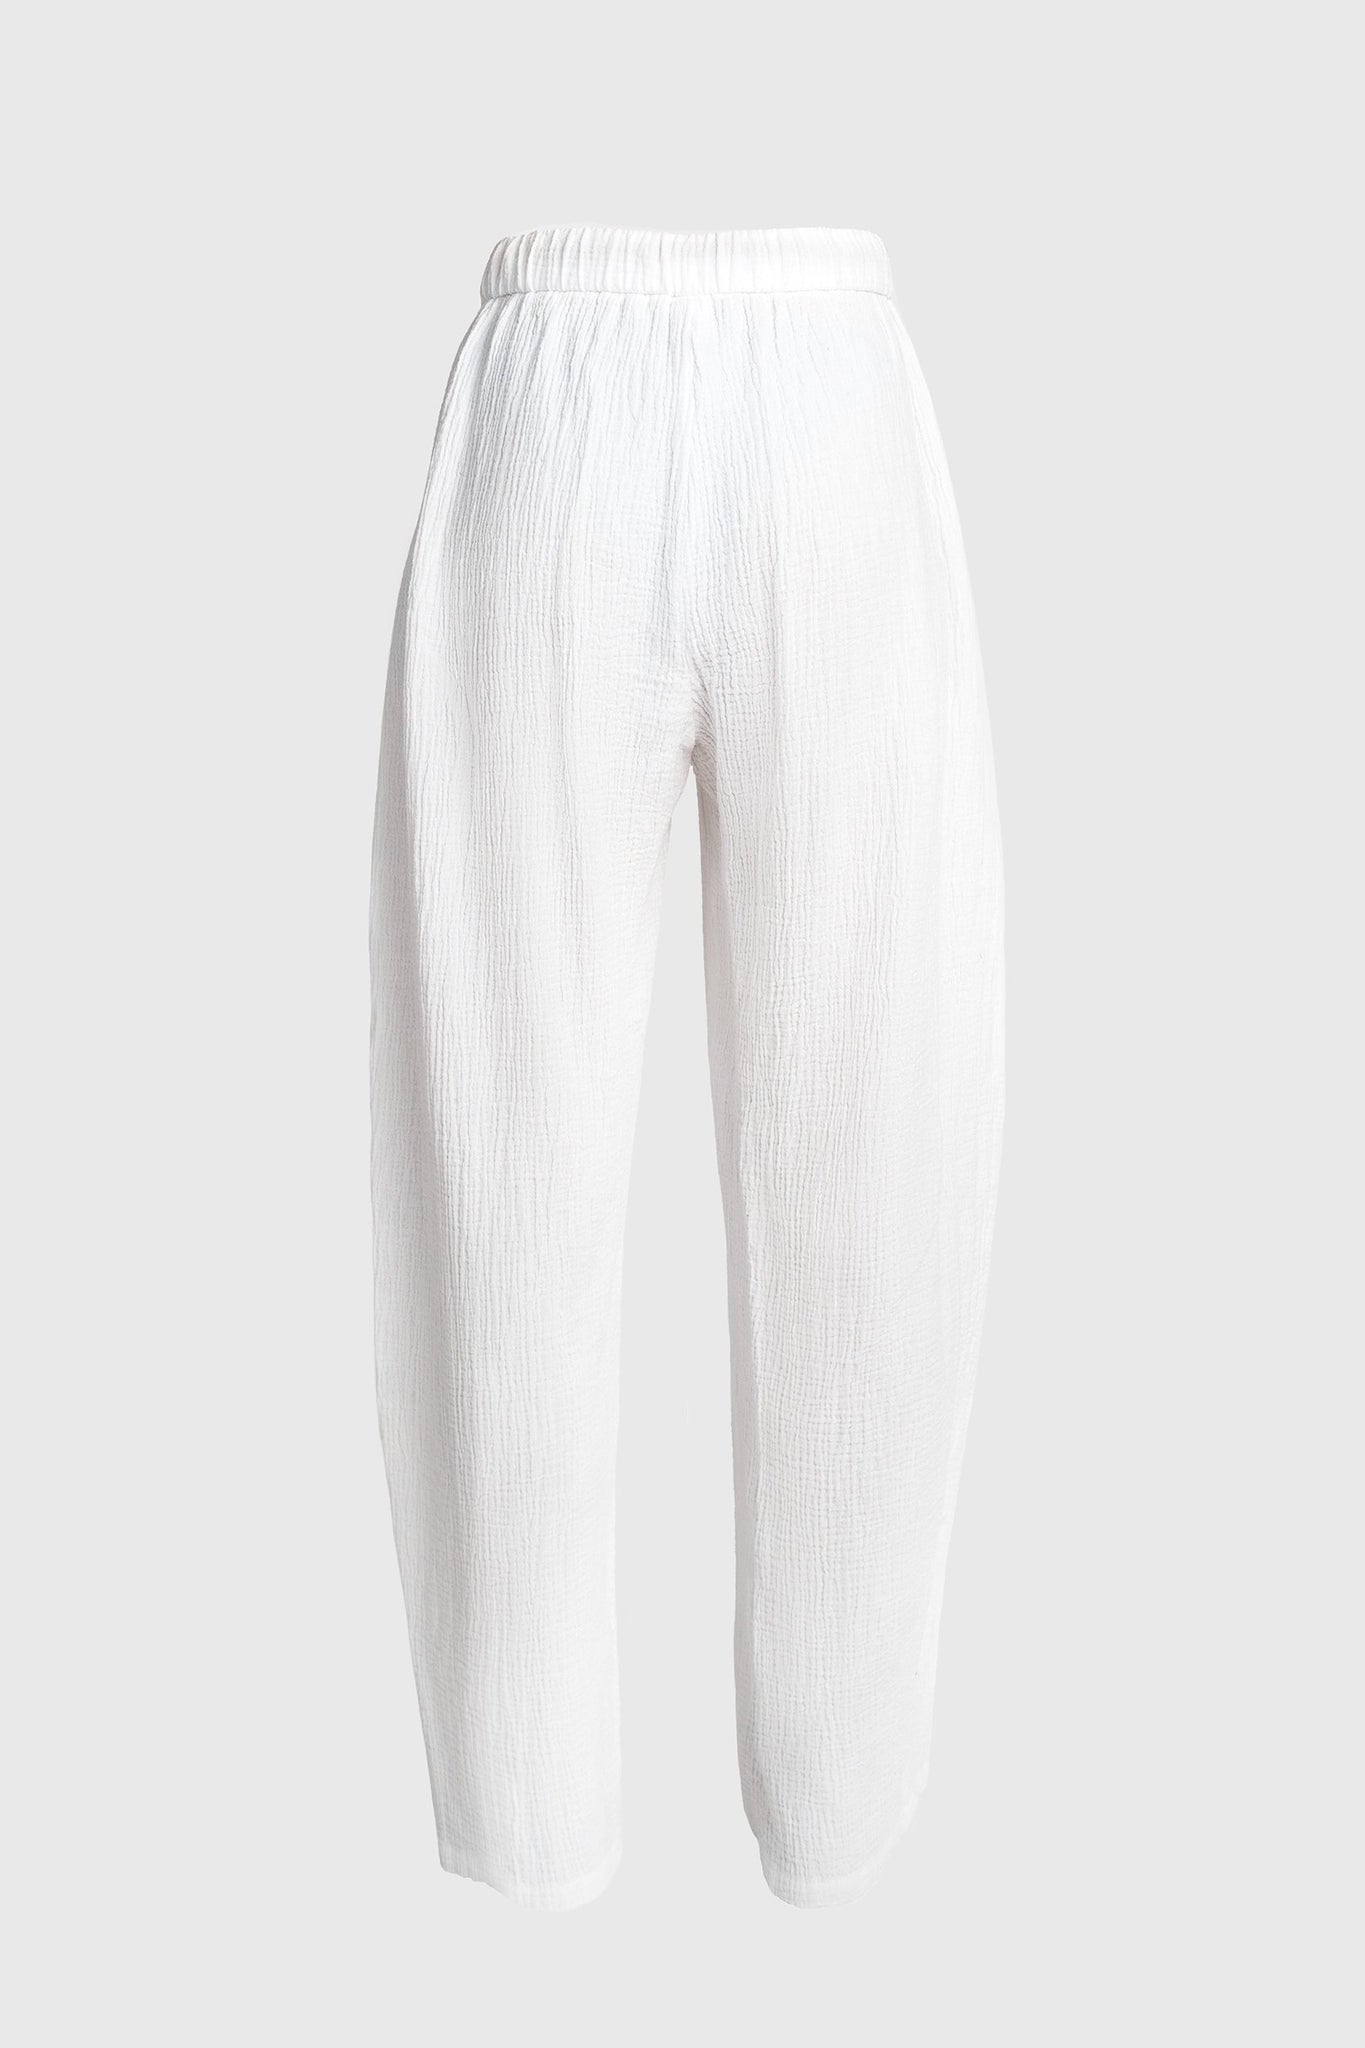 Honey Pants - Wrinkled White Cotton